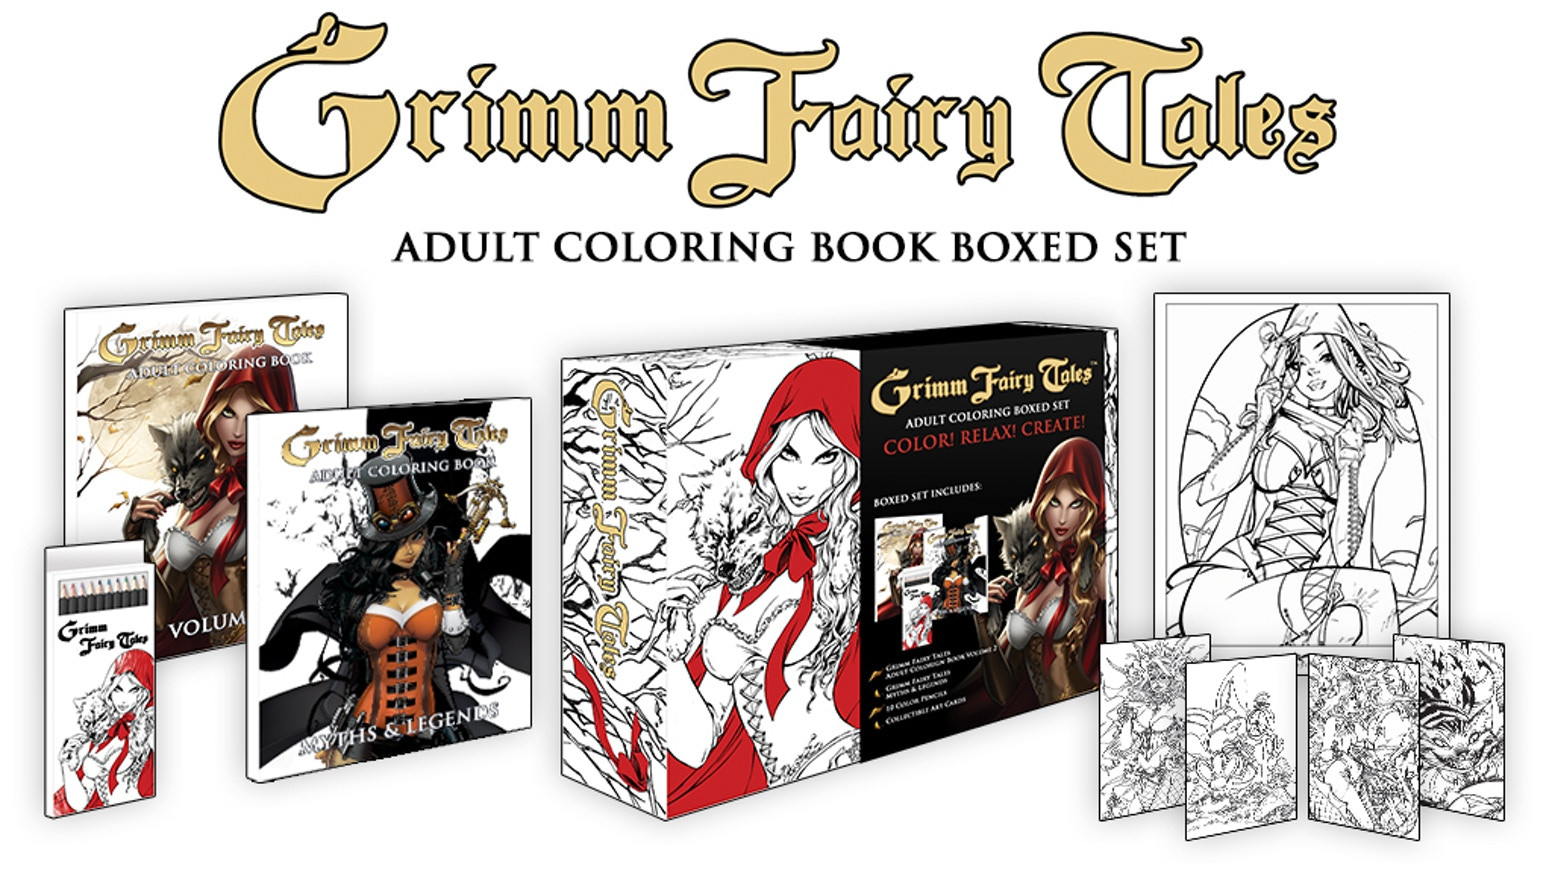 Grimm Fairy Tales Coloring Book Box Set
 Grimm Fairy Tales Coloring Book Boxed Set by Joe Brusha